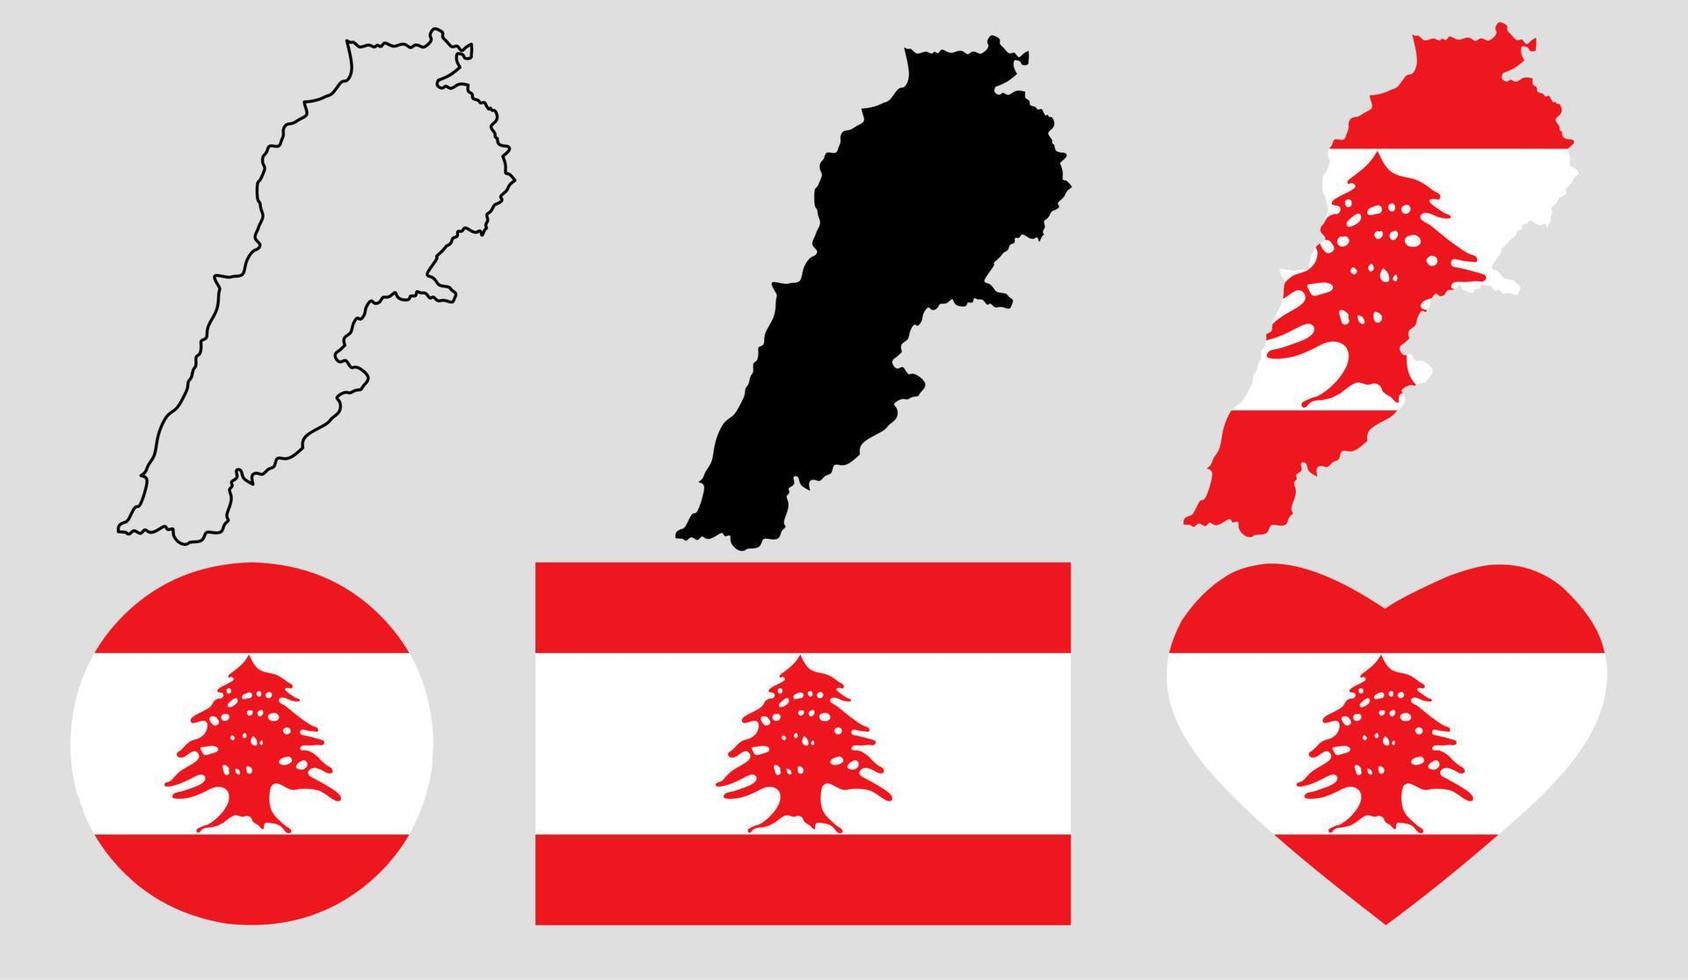 jeu d'icônes de drapeau de carte du liban vecteur